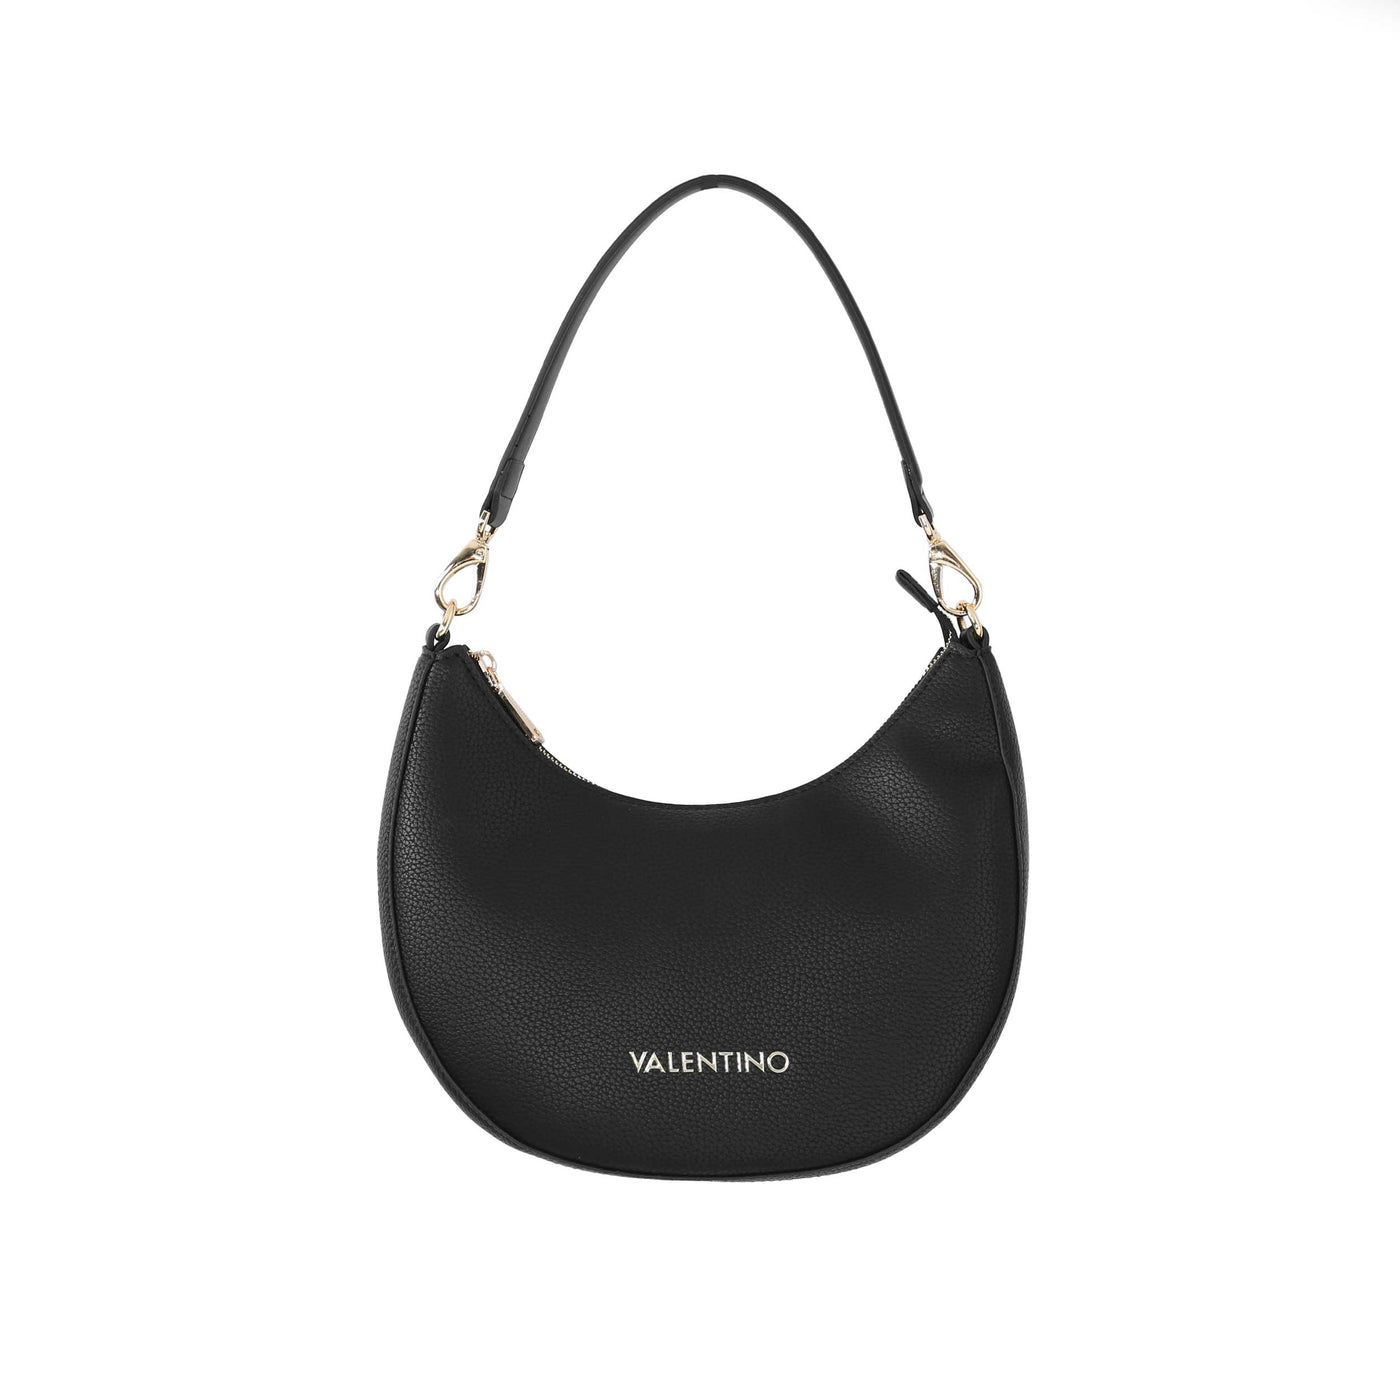 Valentino Bags Alexia Ladies Shoulder Bag in Ecru front